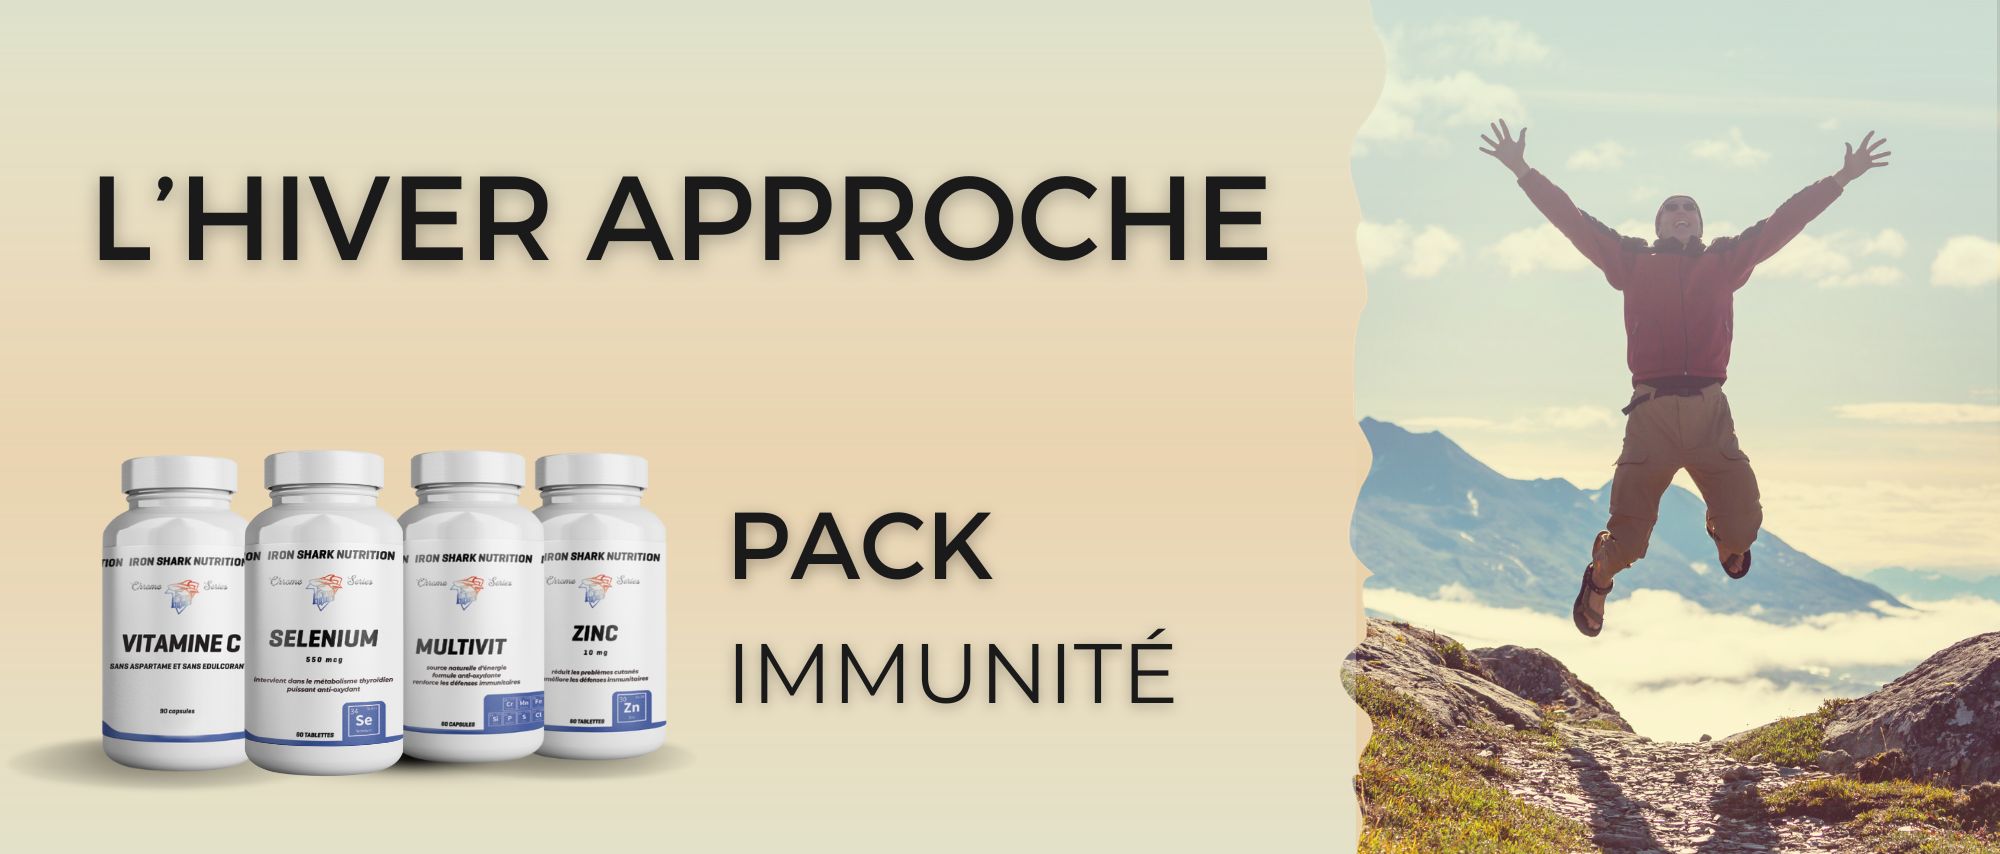 Pack immunité